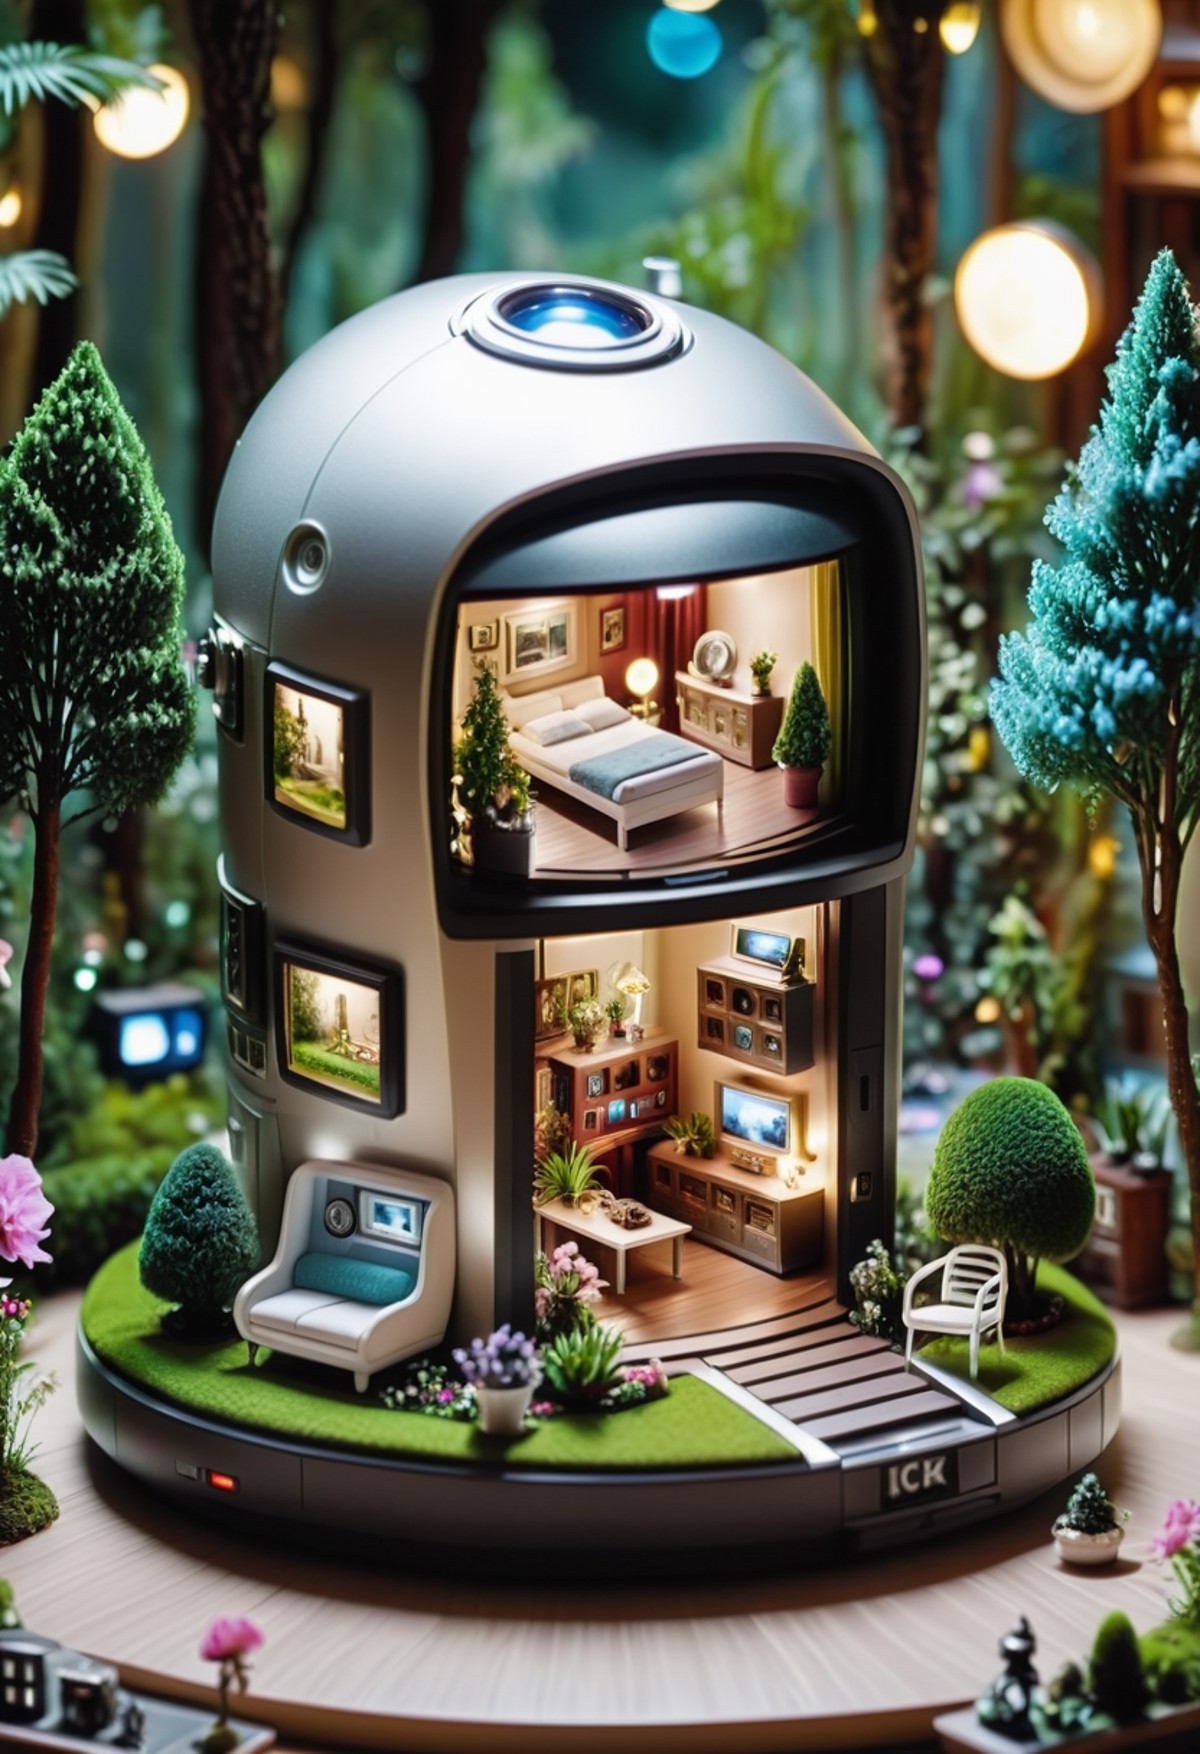 cinematic photo In a futuristic world, a miniature house sits inside a rude digital camera. It's the interior of a cozy li...